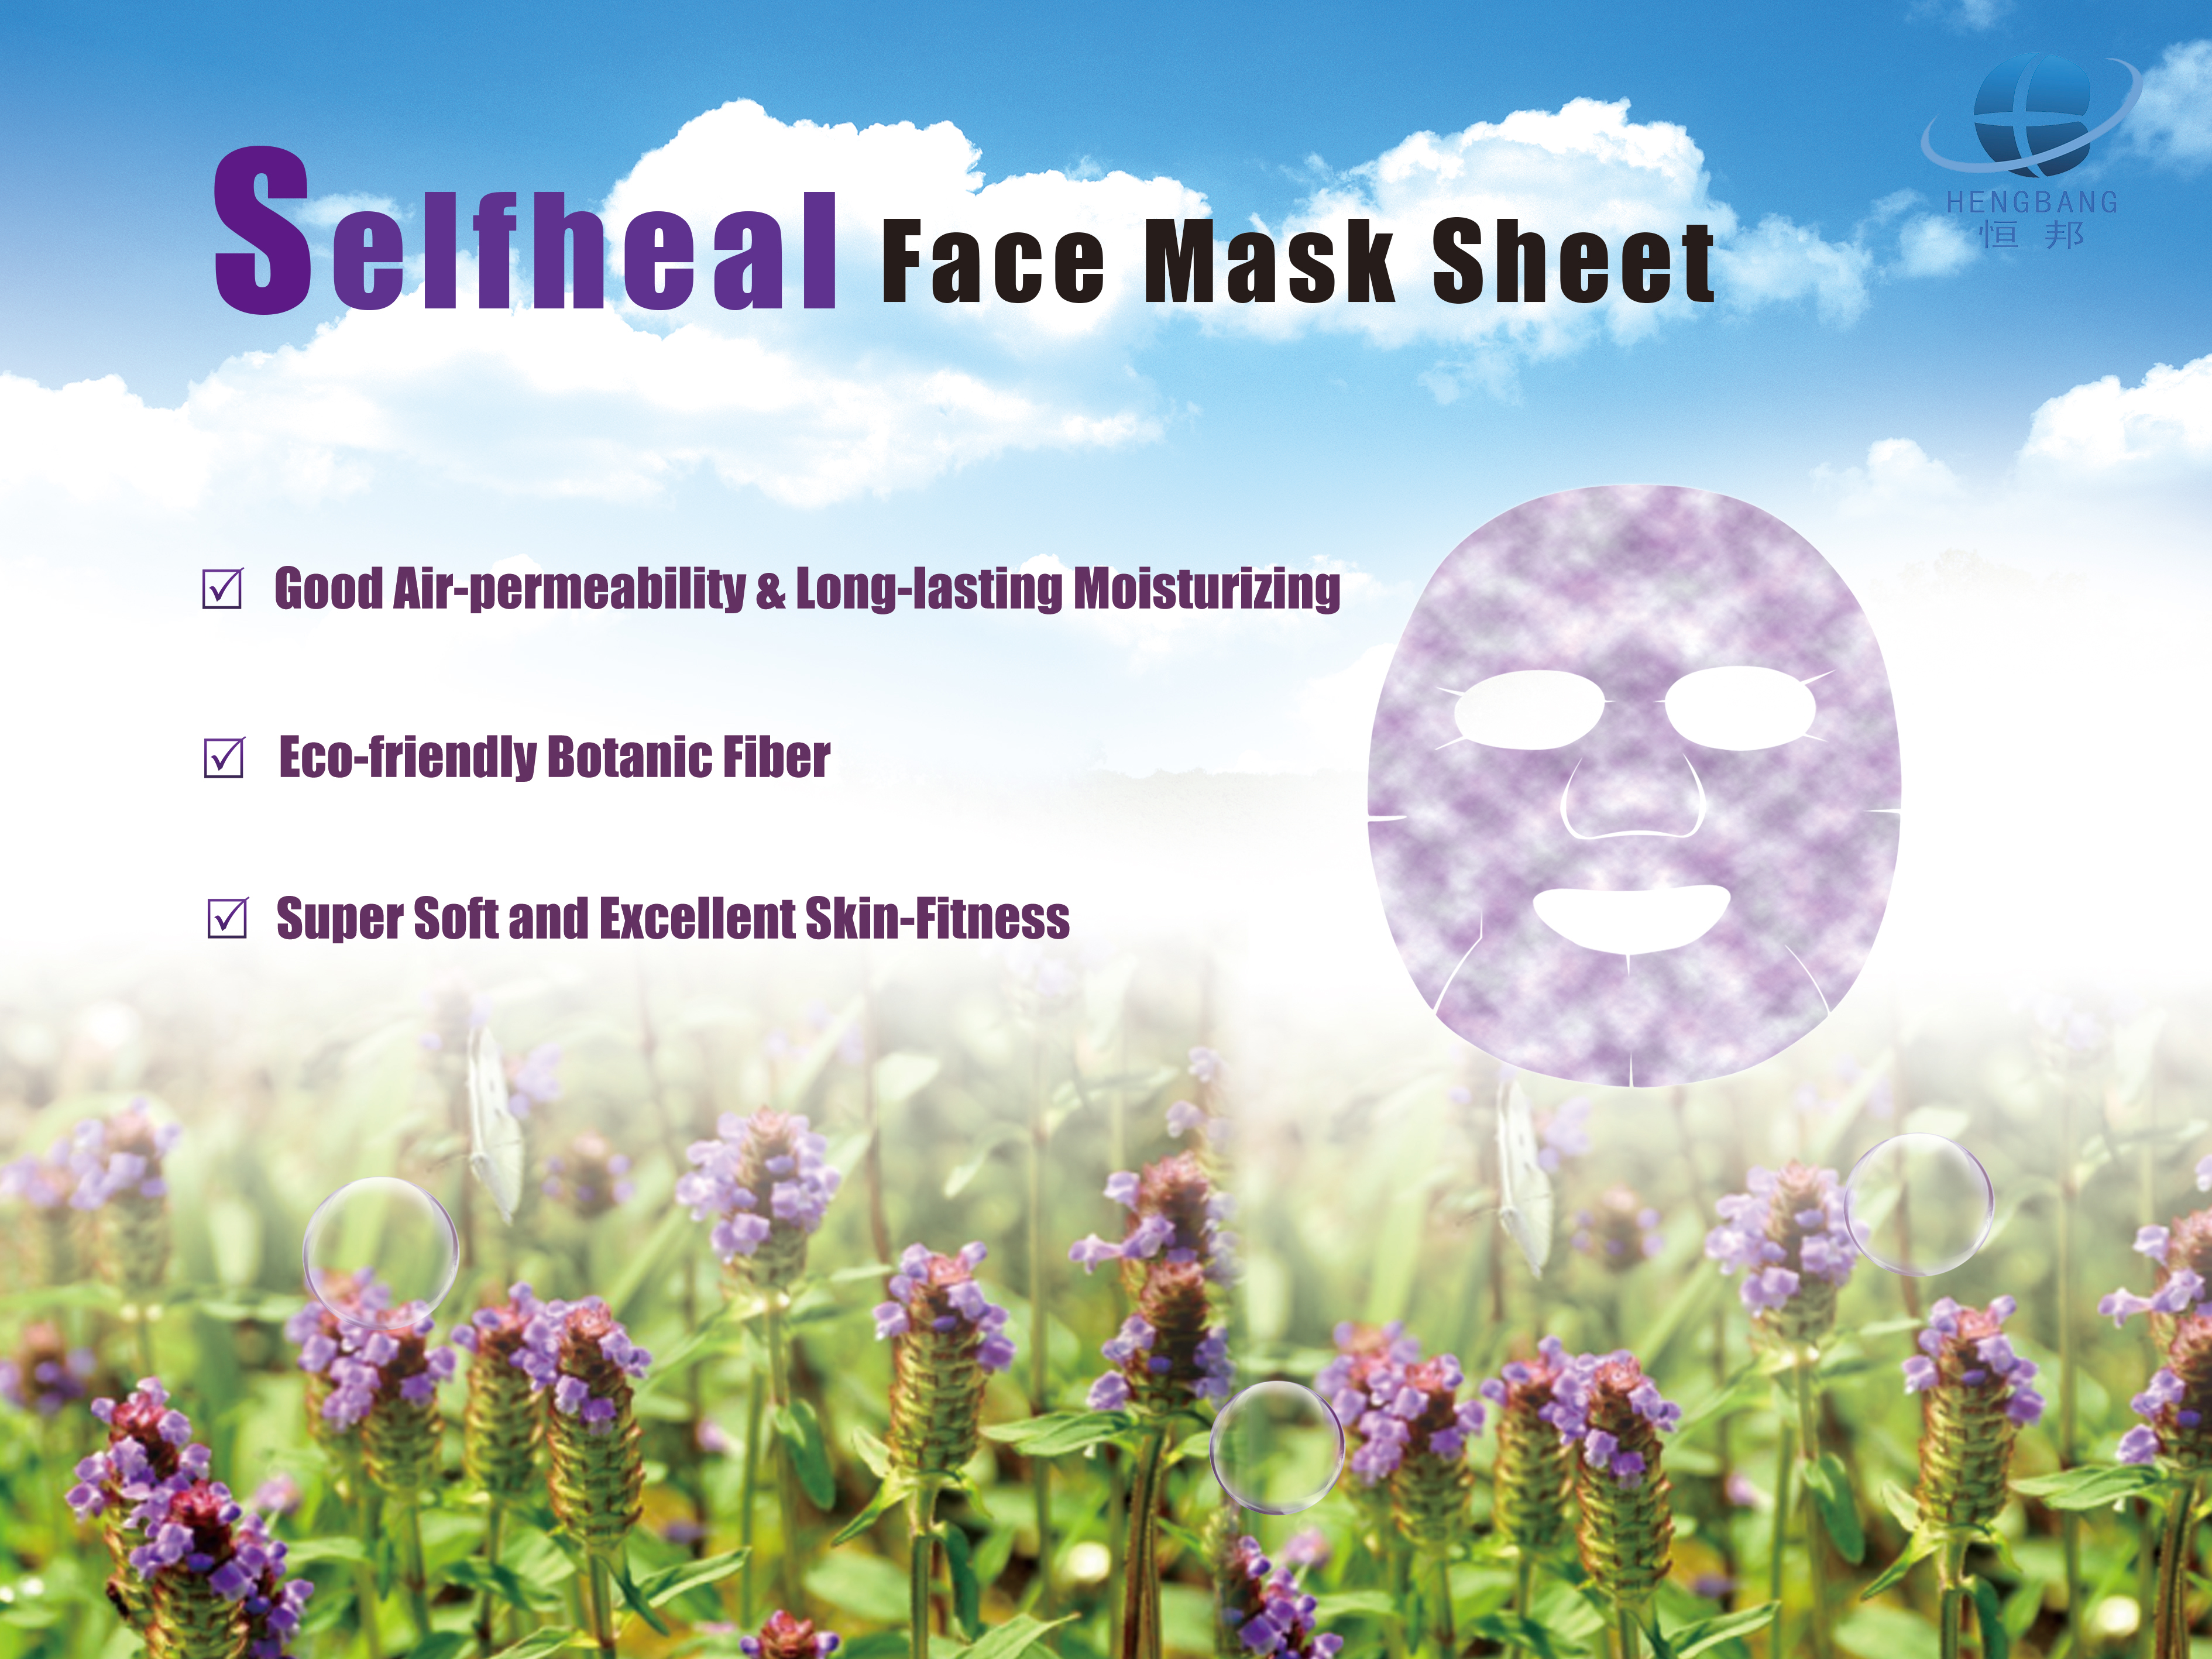 Selfheal Face Mask Sheet